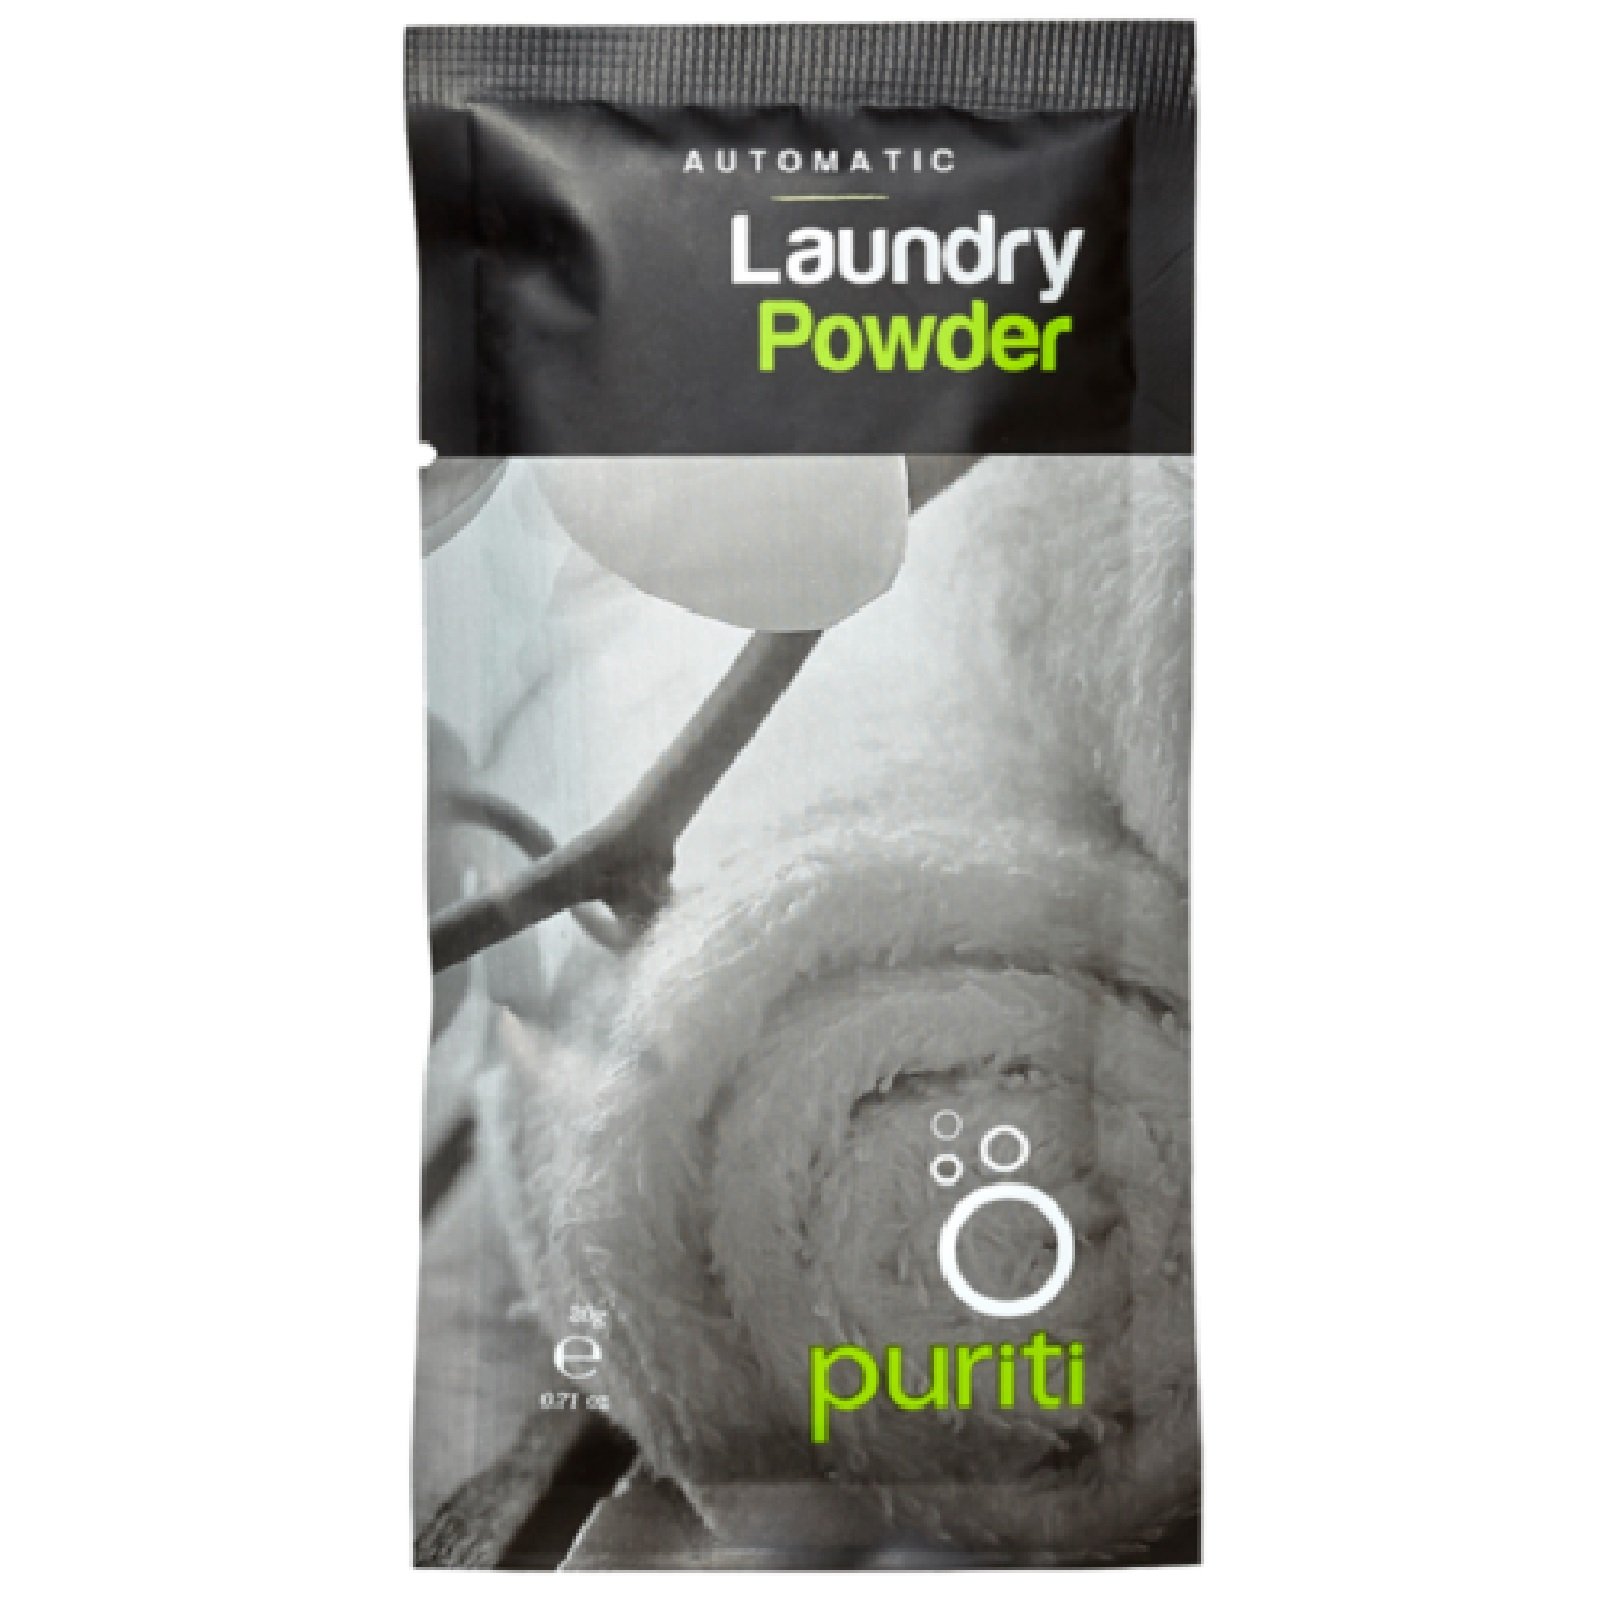 Laundry powder Sachet Bio-Degradable Formulation 20mlx500